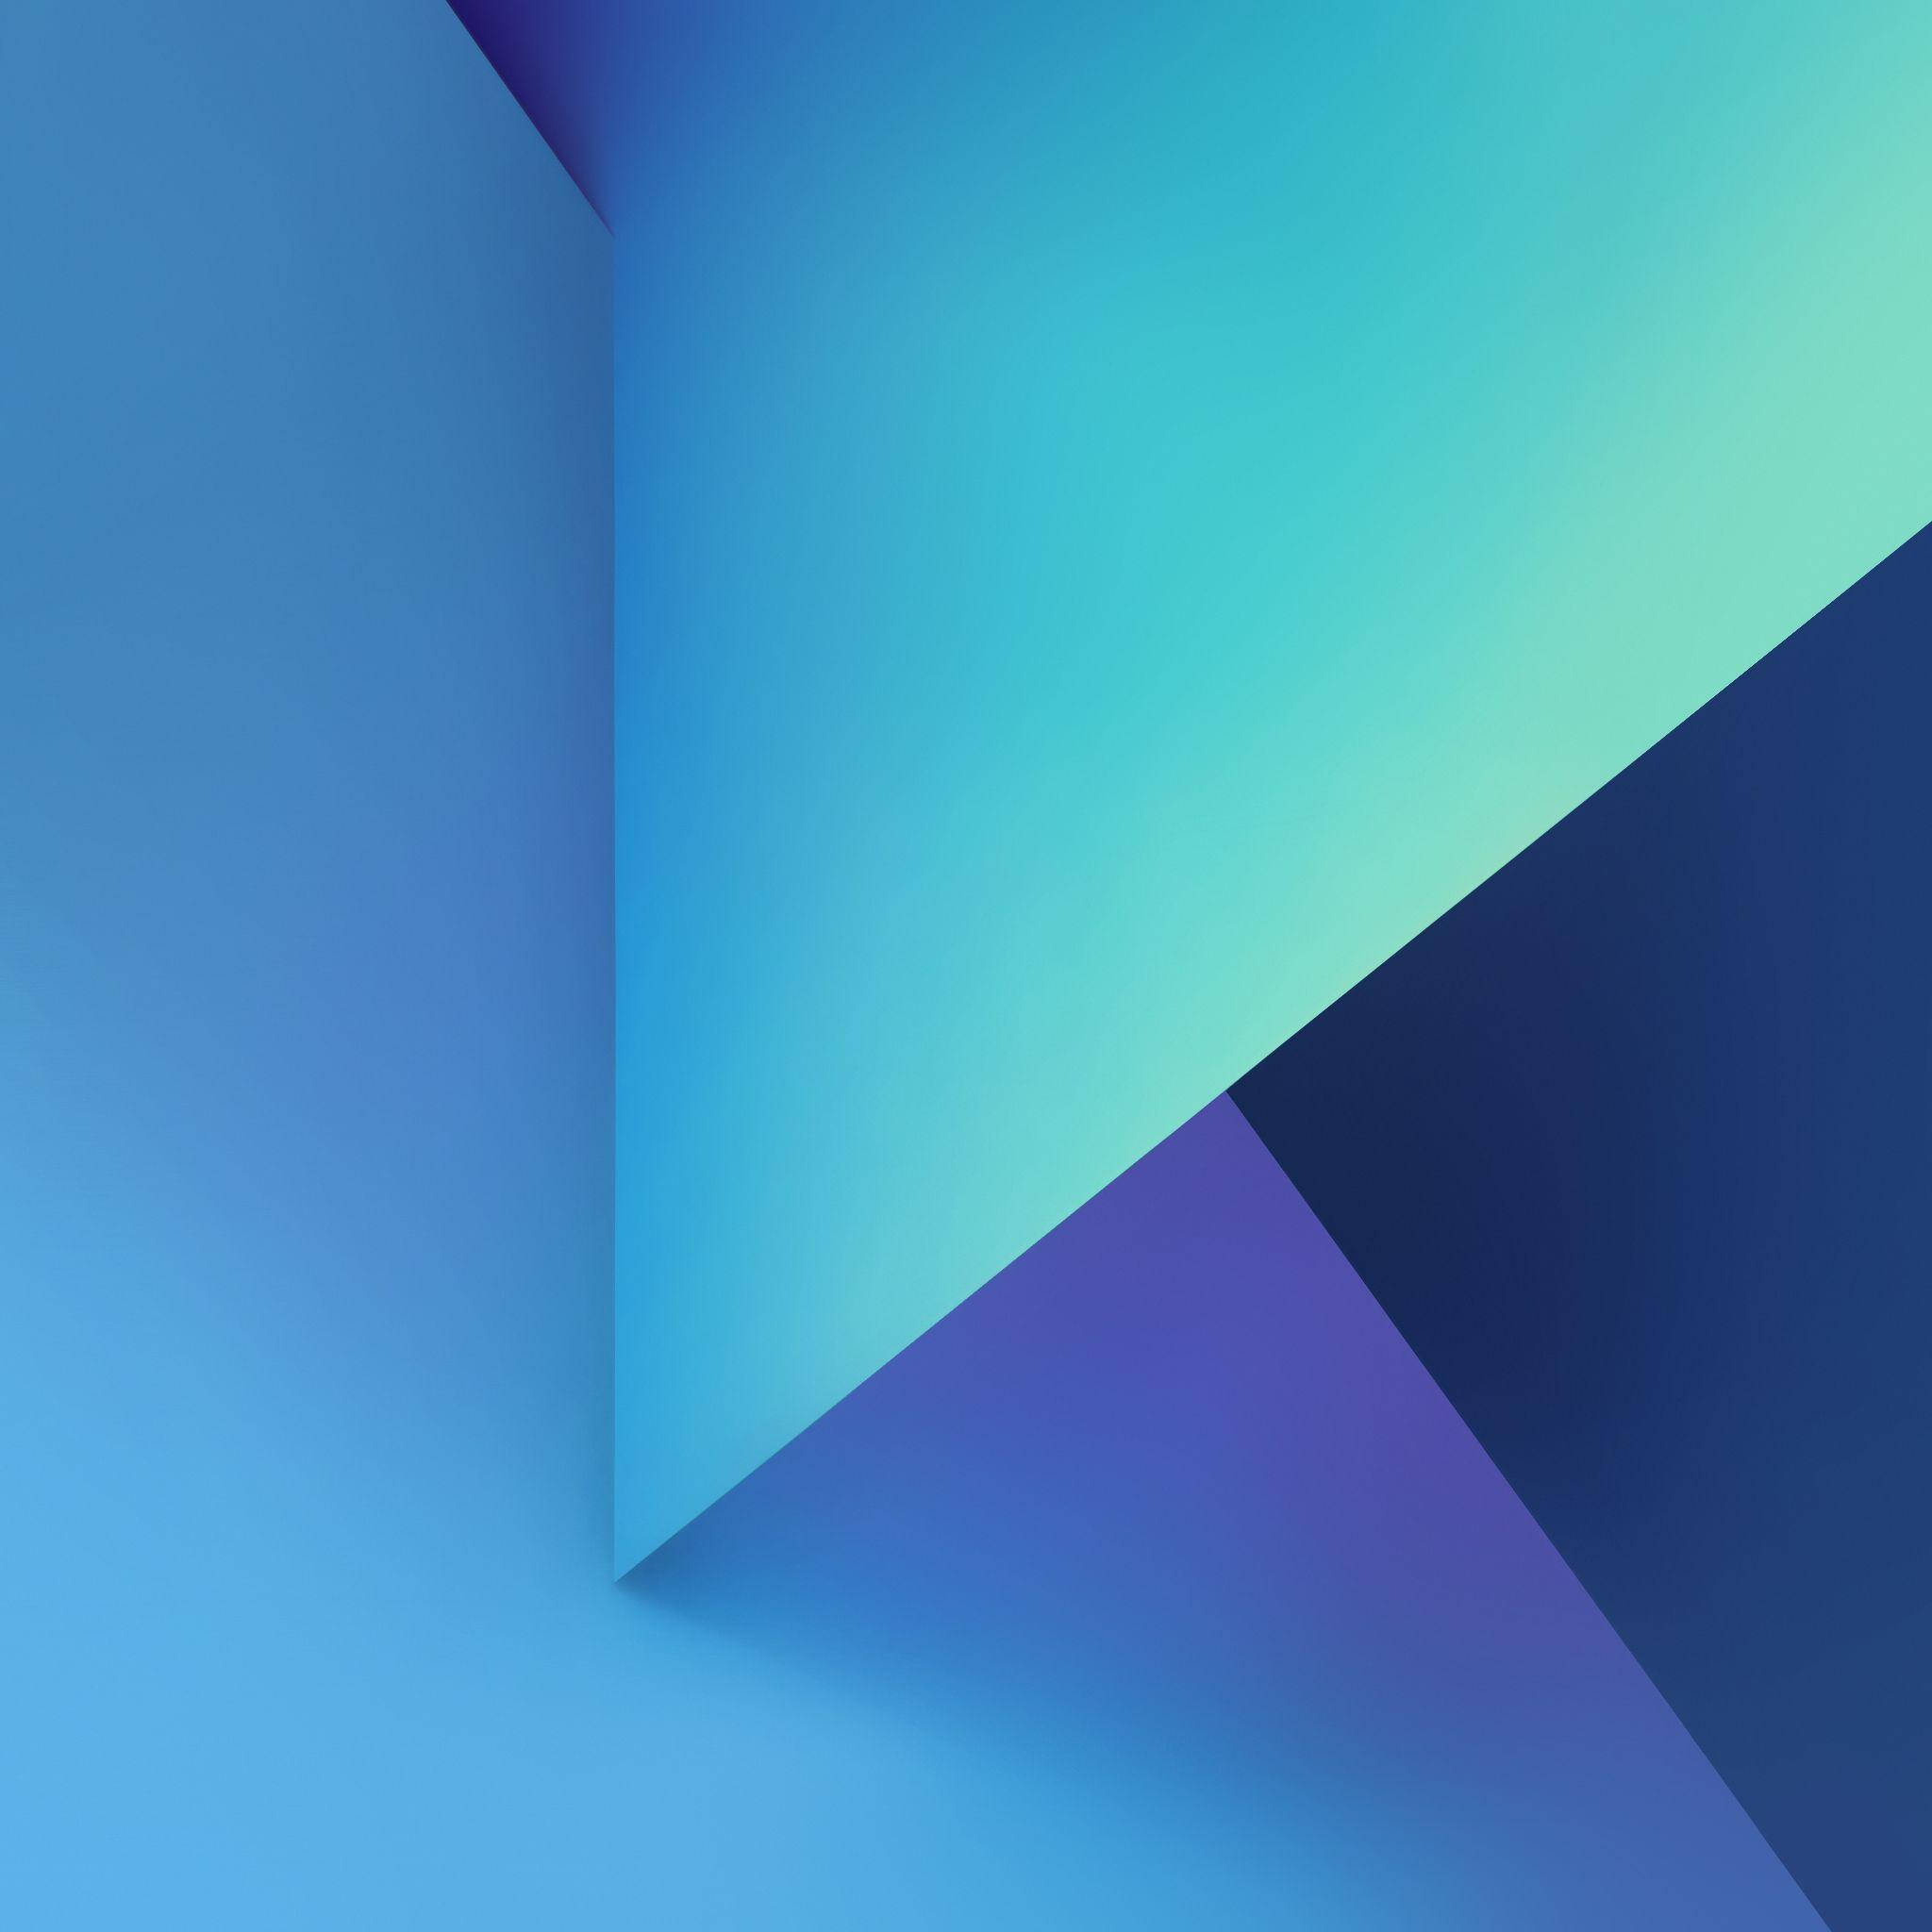 Download Iridescent Blue Shapes Samsung Galaxy Tablet Wallpaper | Wallpapers .com